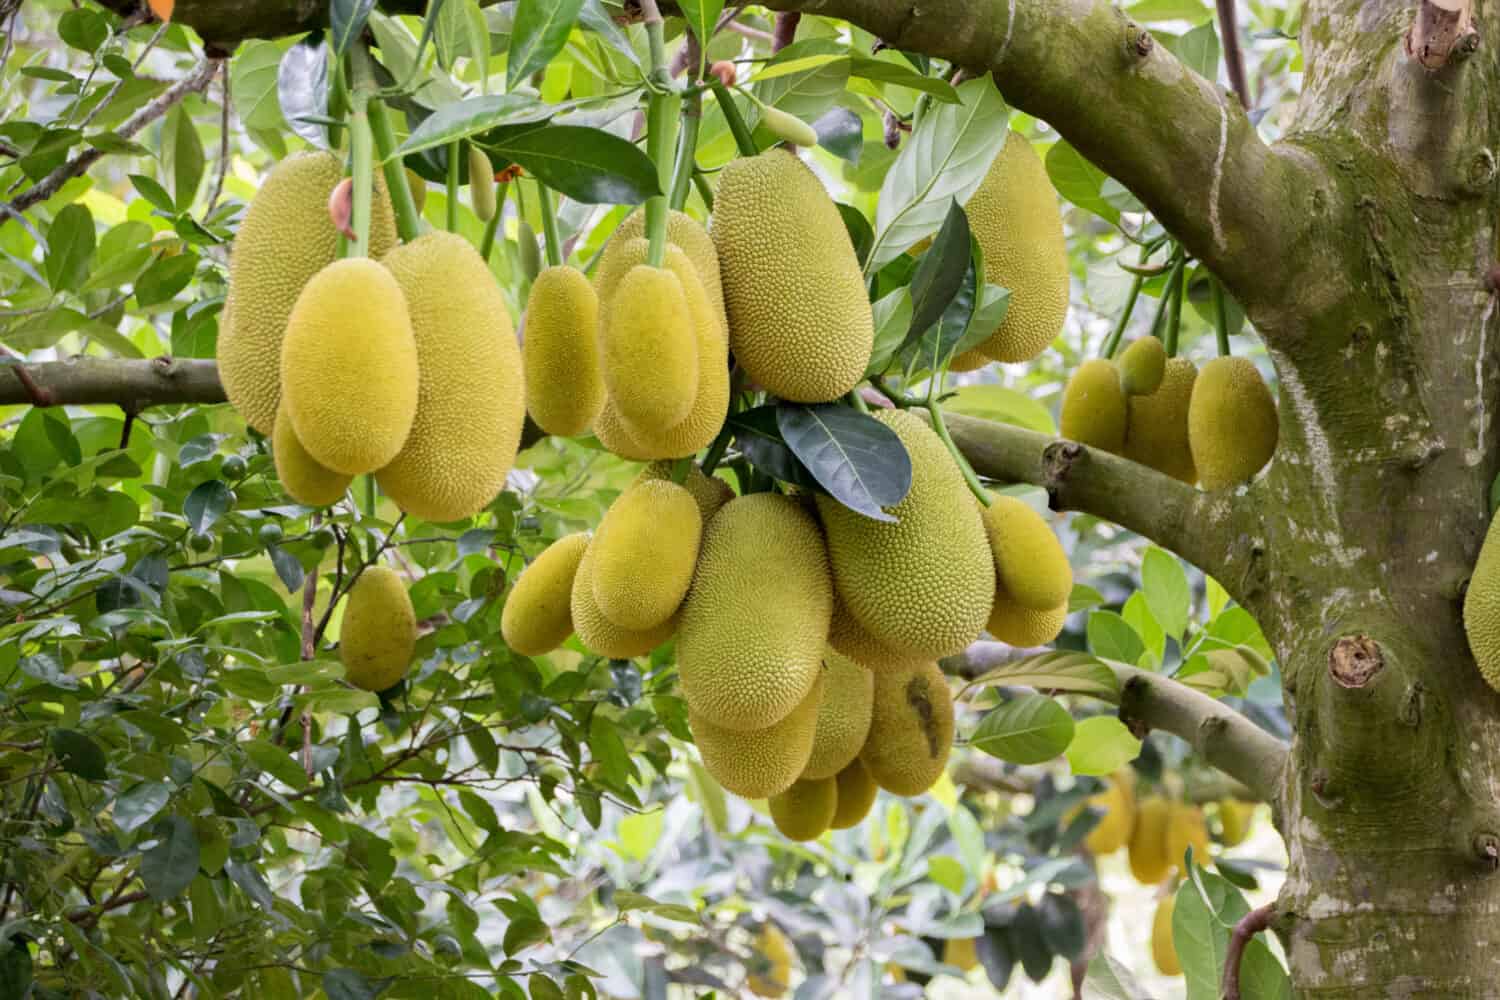 Jack fruits hanging in trees in a tropical fruit garden in Vietnam